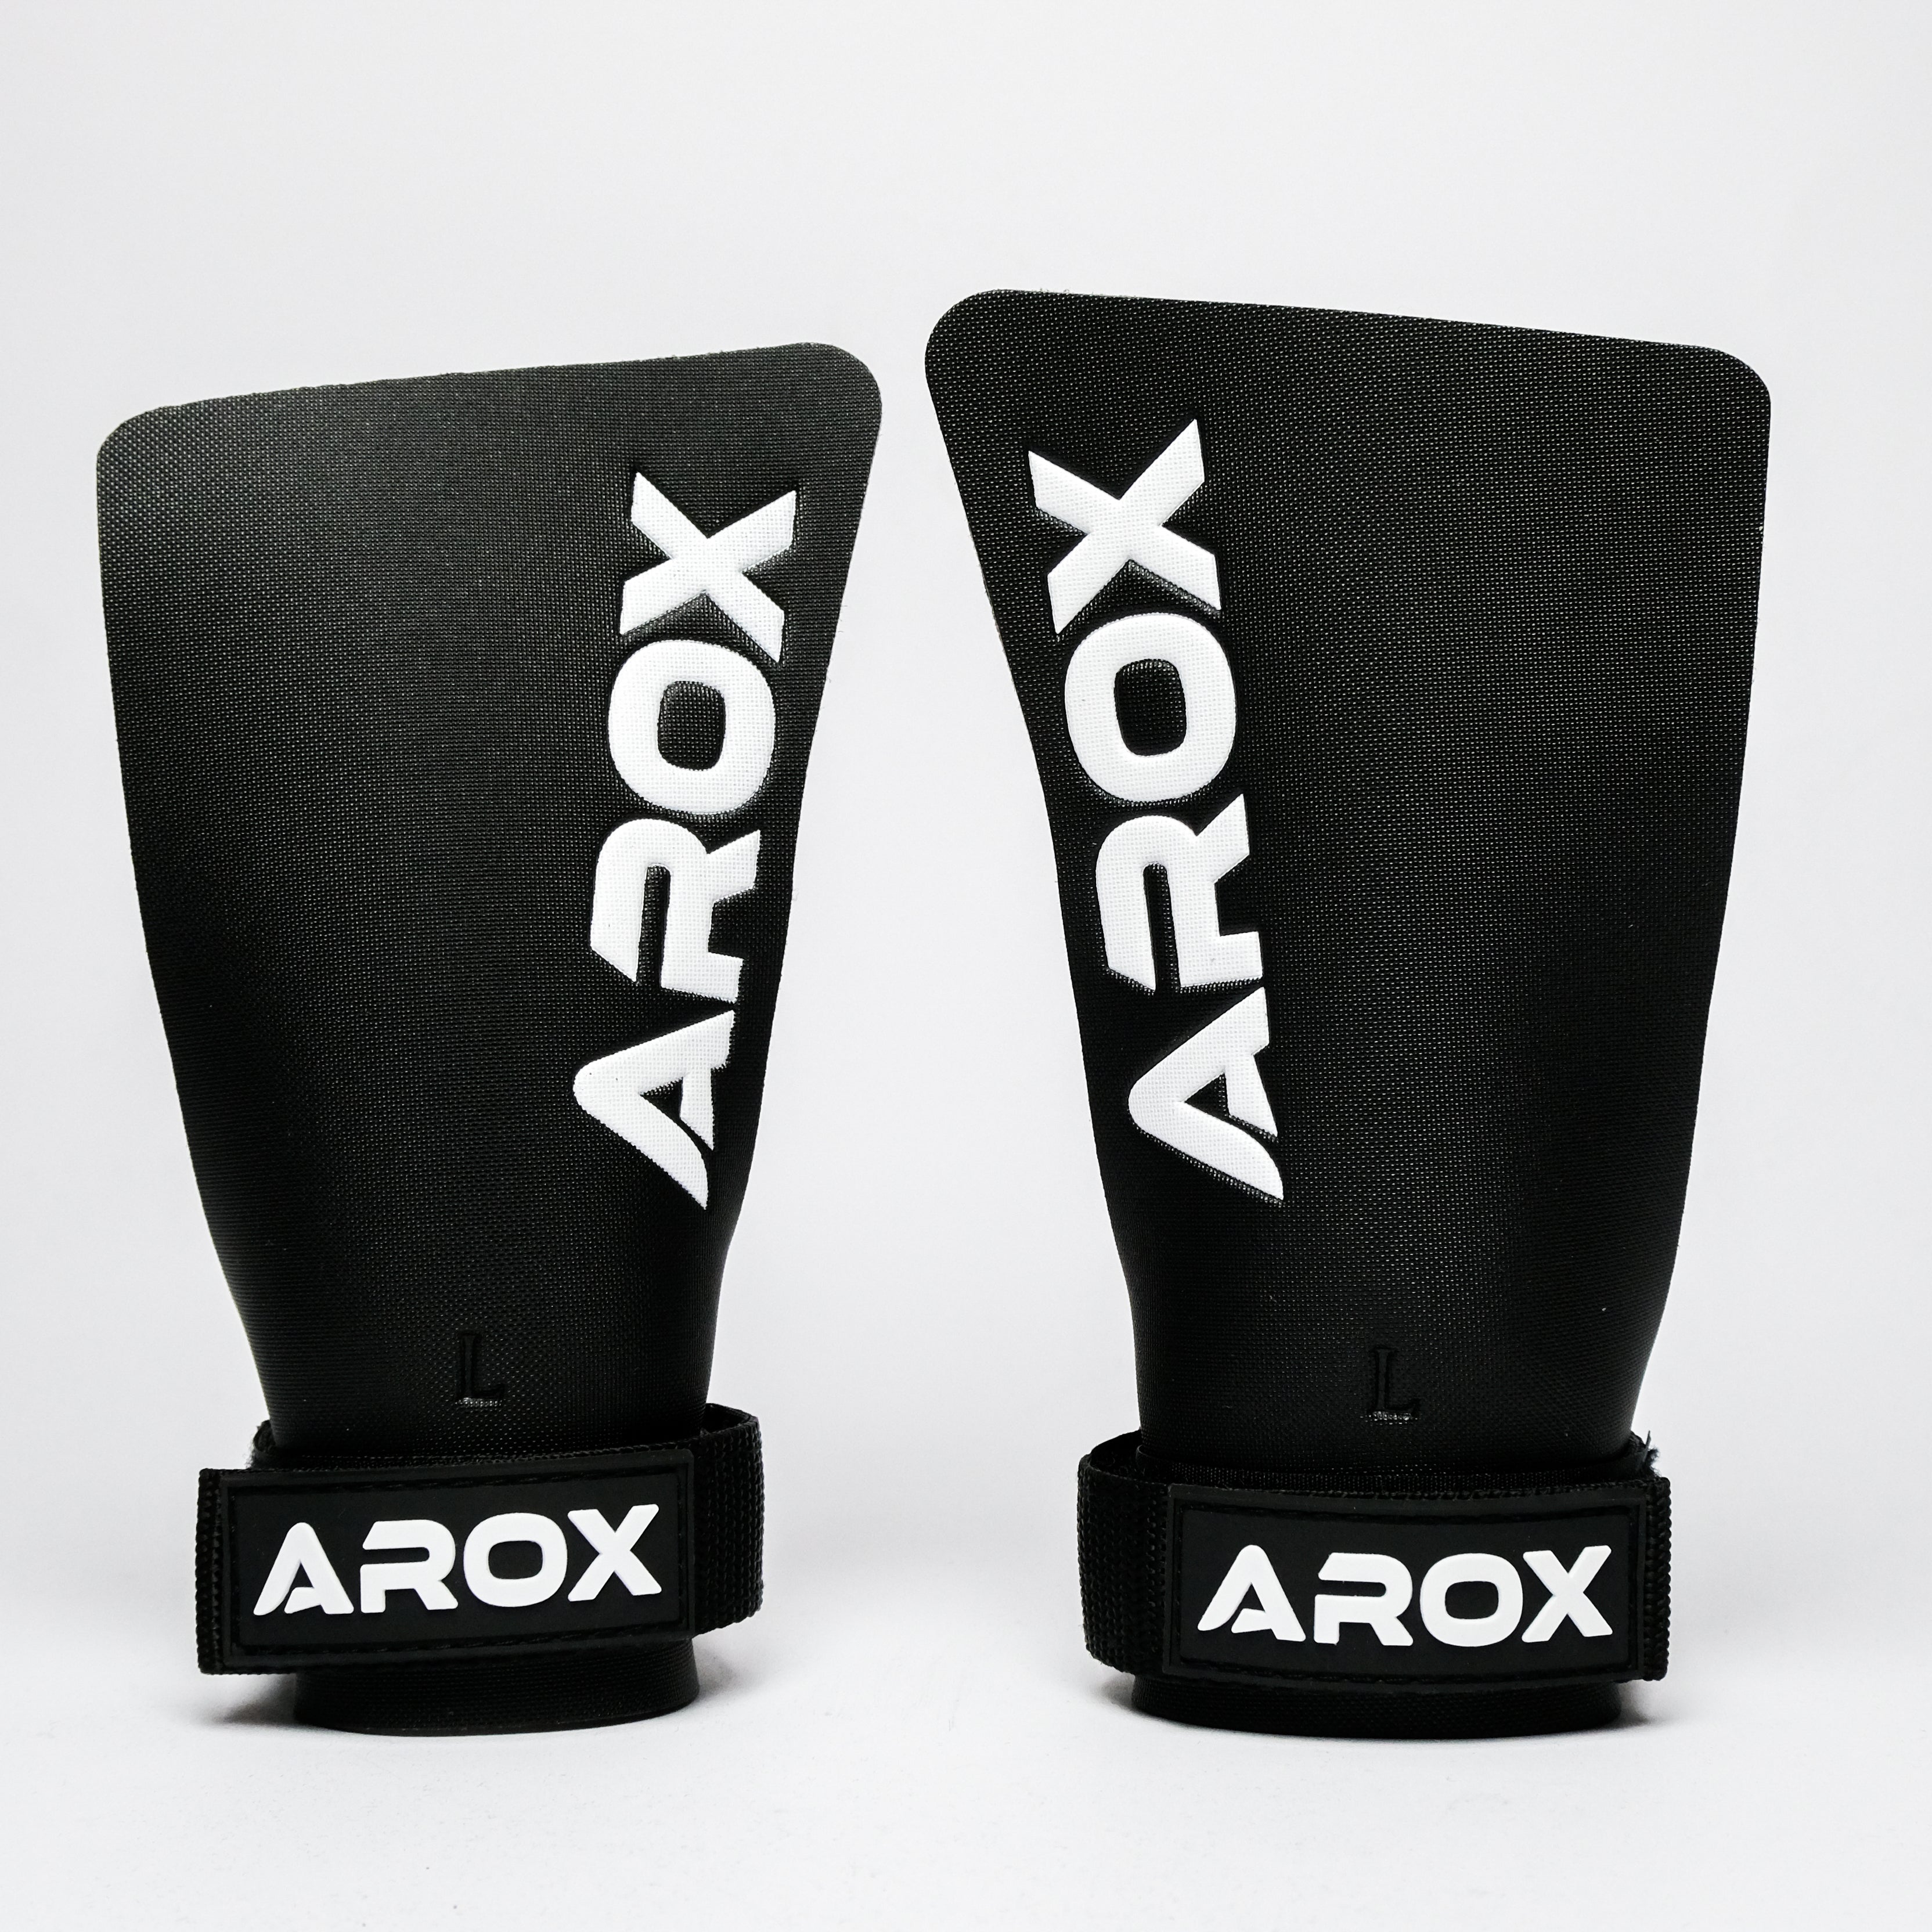 Arox hybrid grips